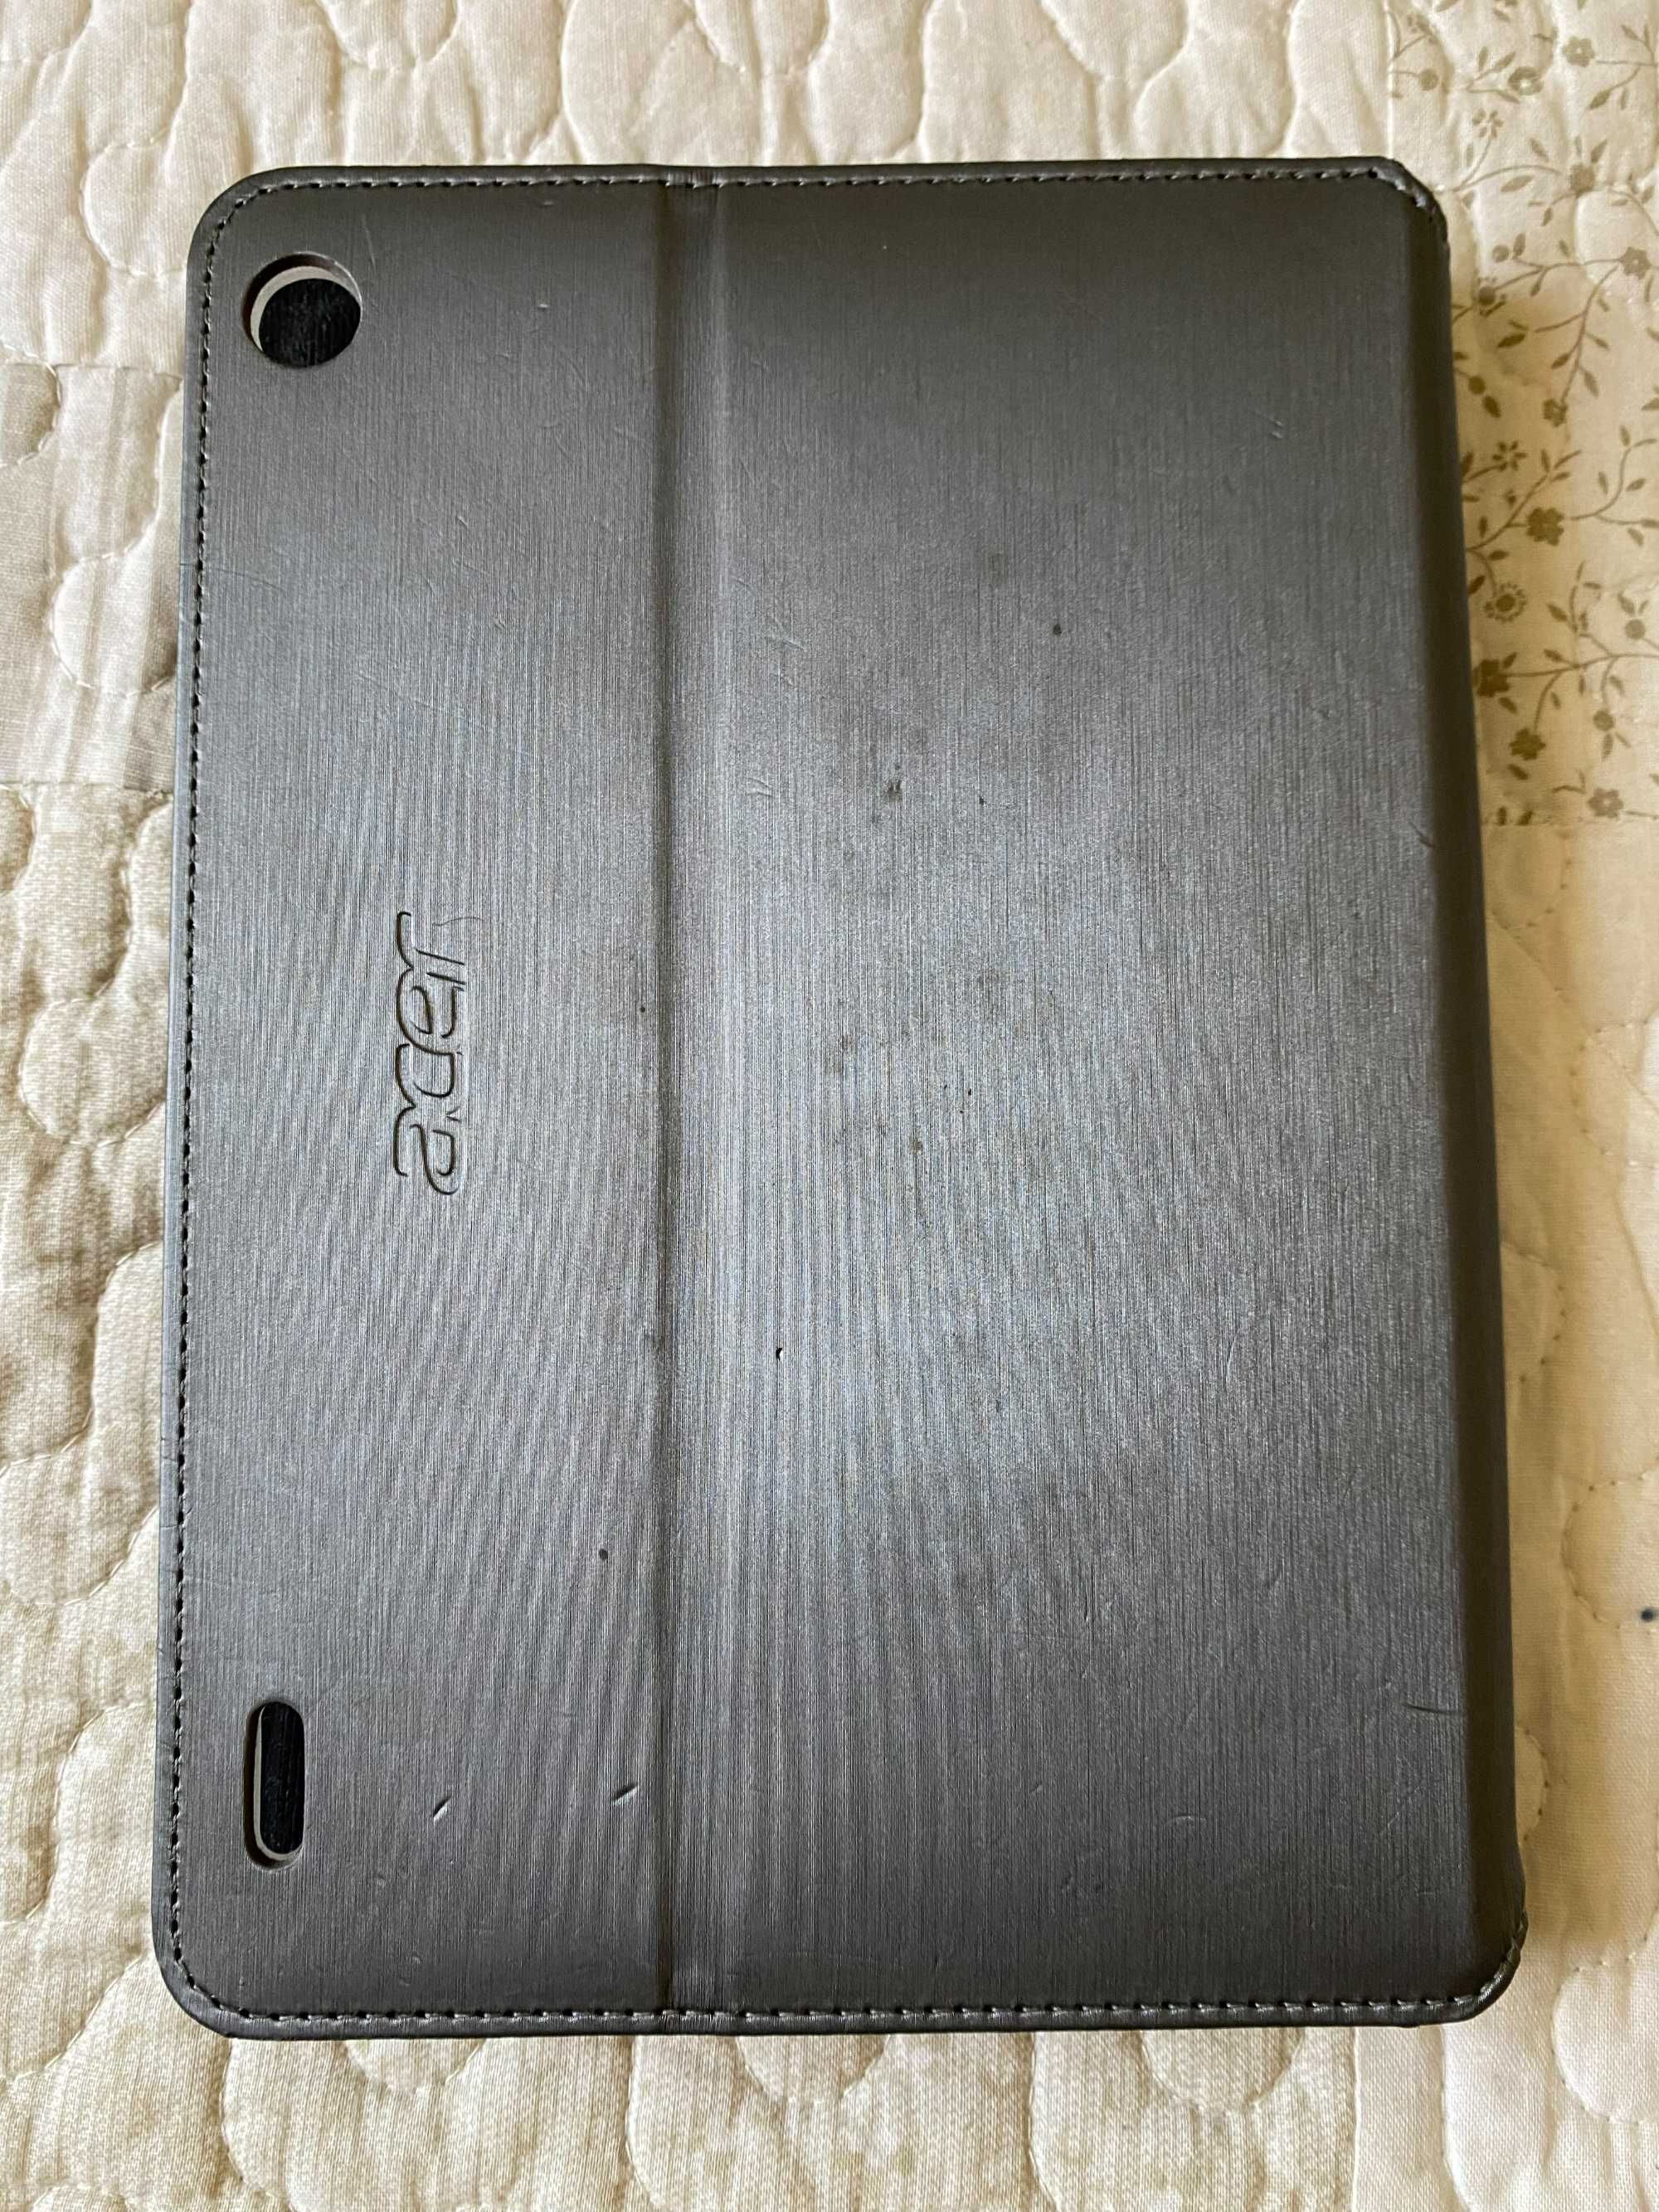 Tableta Acer Iconia A1-810, cu husa